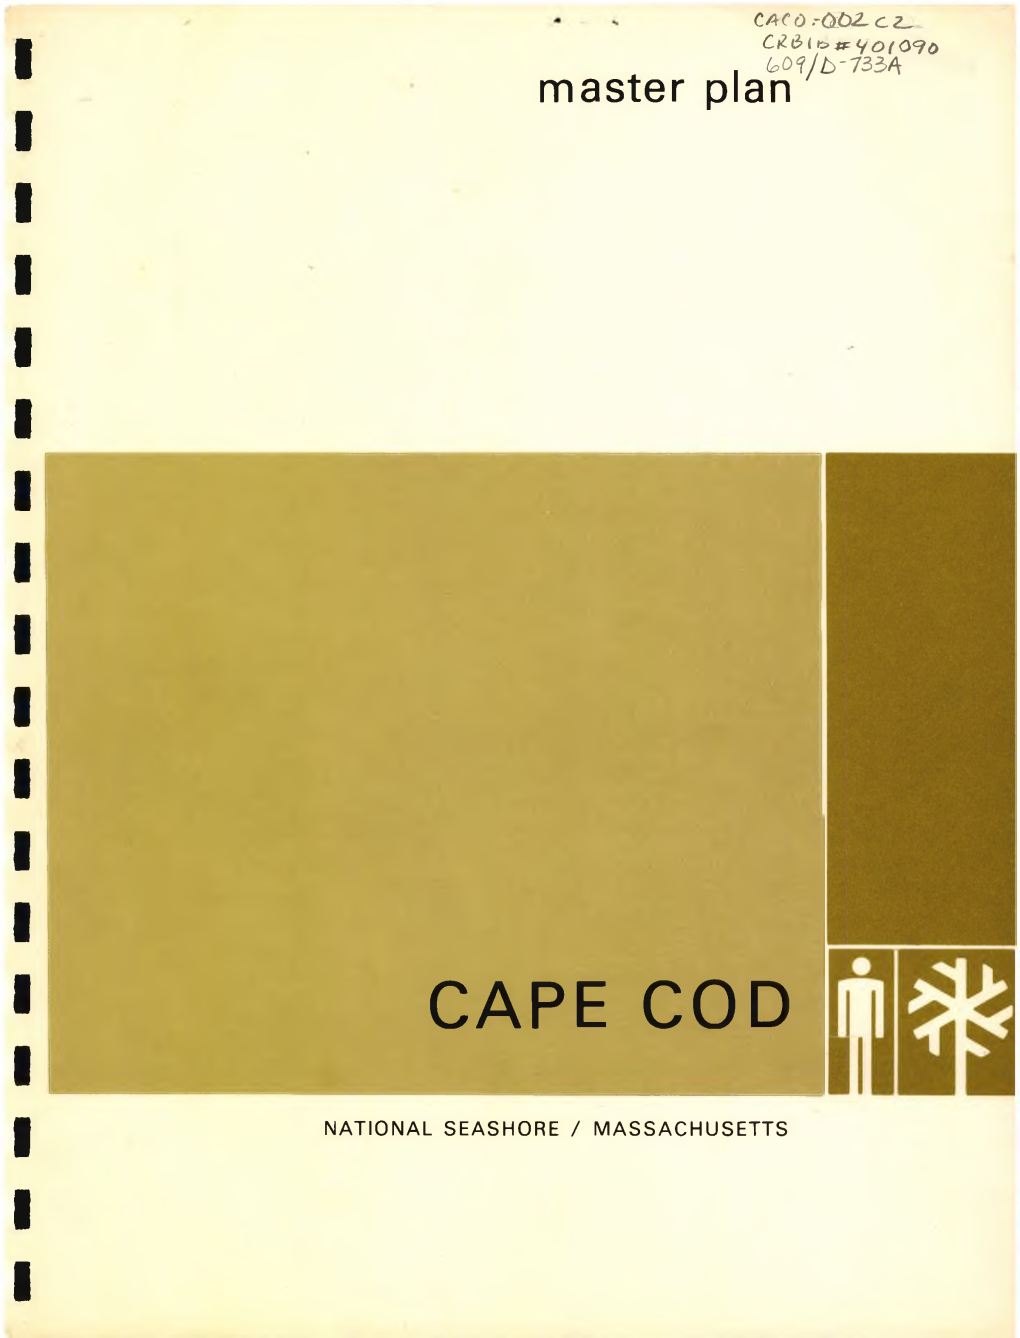 Master Plan, Cape Cod National Seashore, Massachusetts